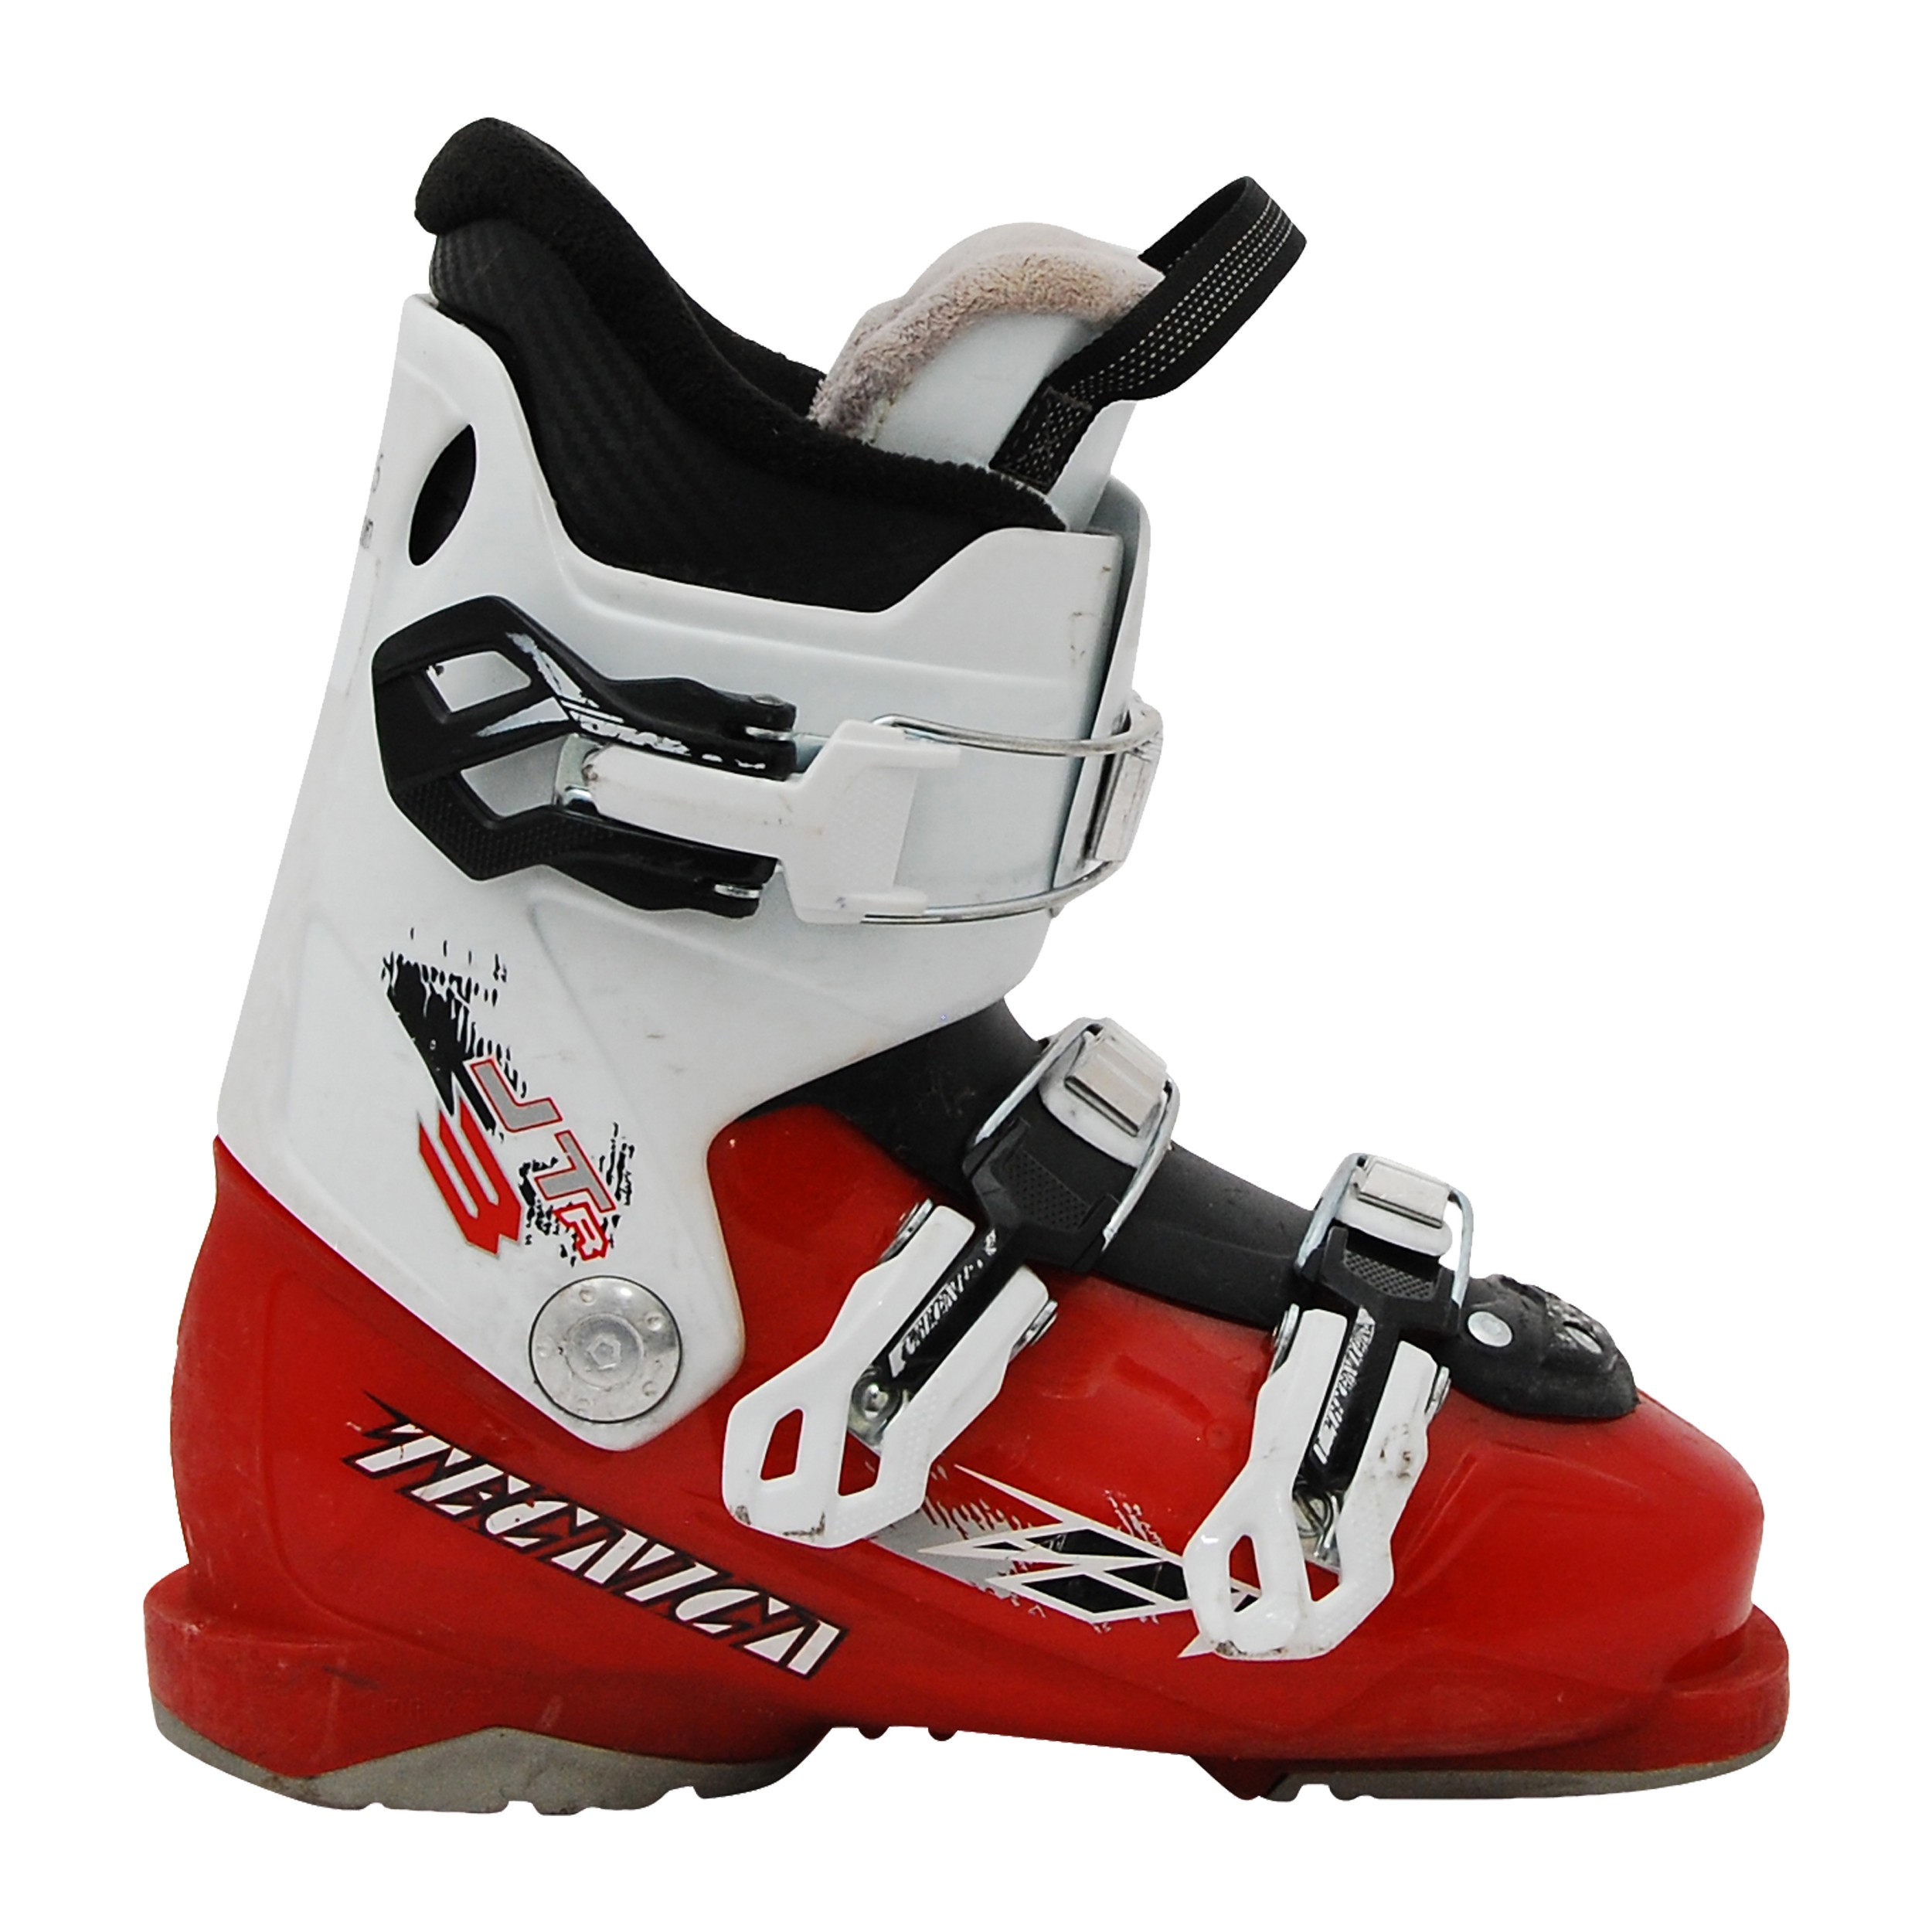 tecnica junior ski boots